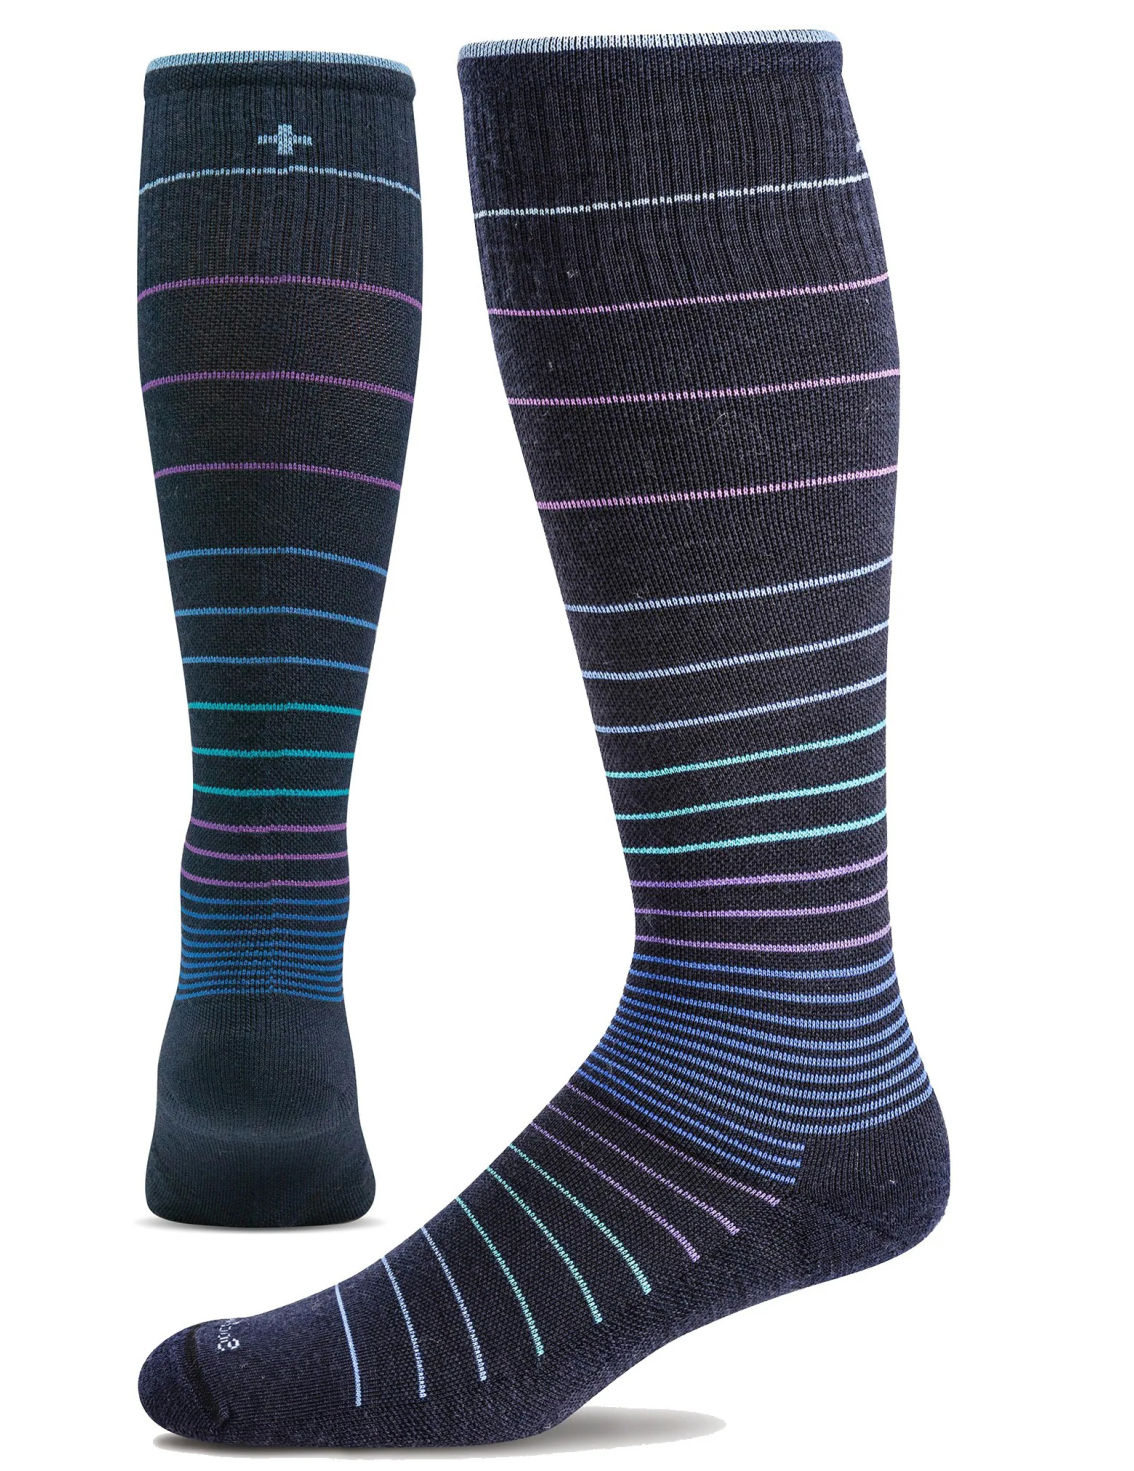 compression-socks